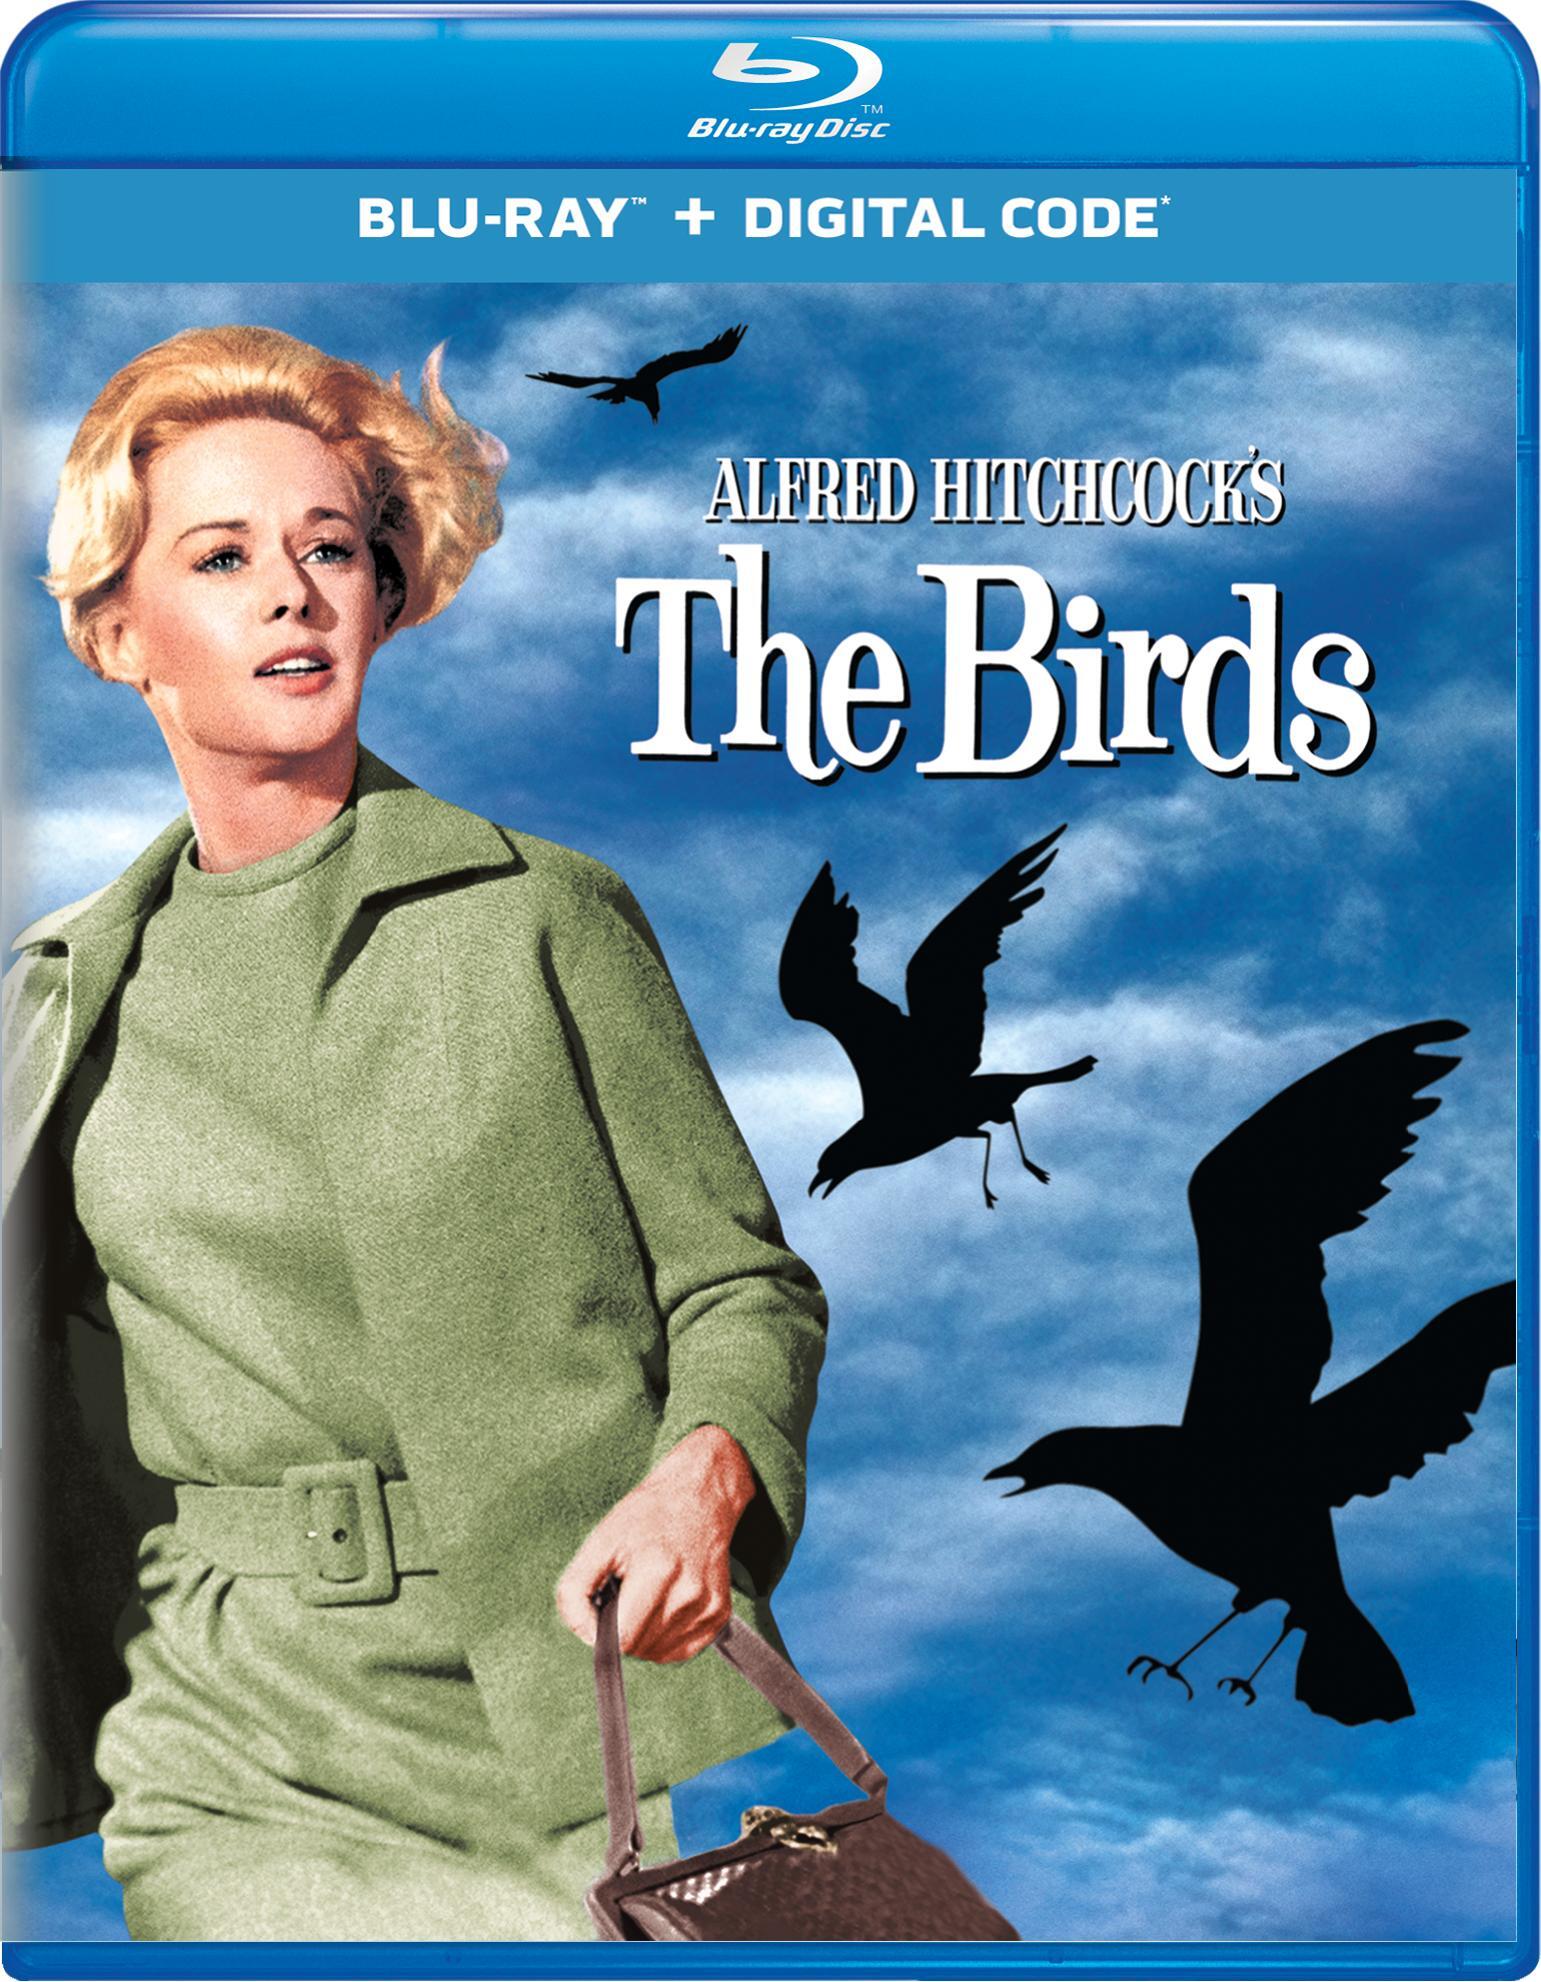 The Birds (Blu-ray + Digital Copy) - Blu-ray [ 1963 ]  - Modern Classic Movies On Blu-ray - Movies On GRUV